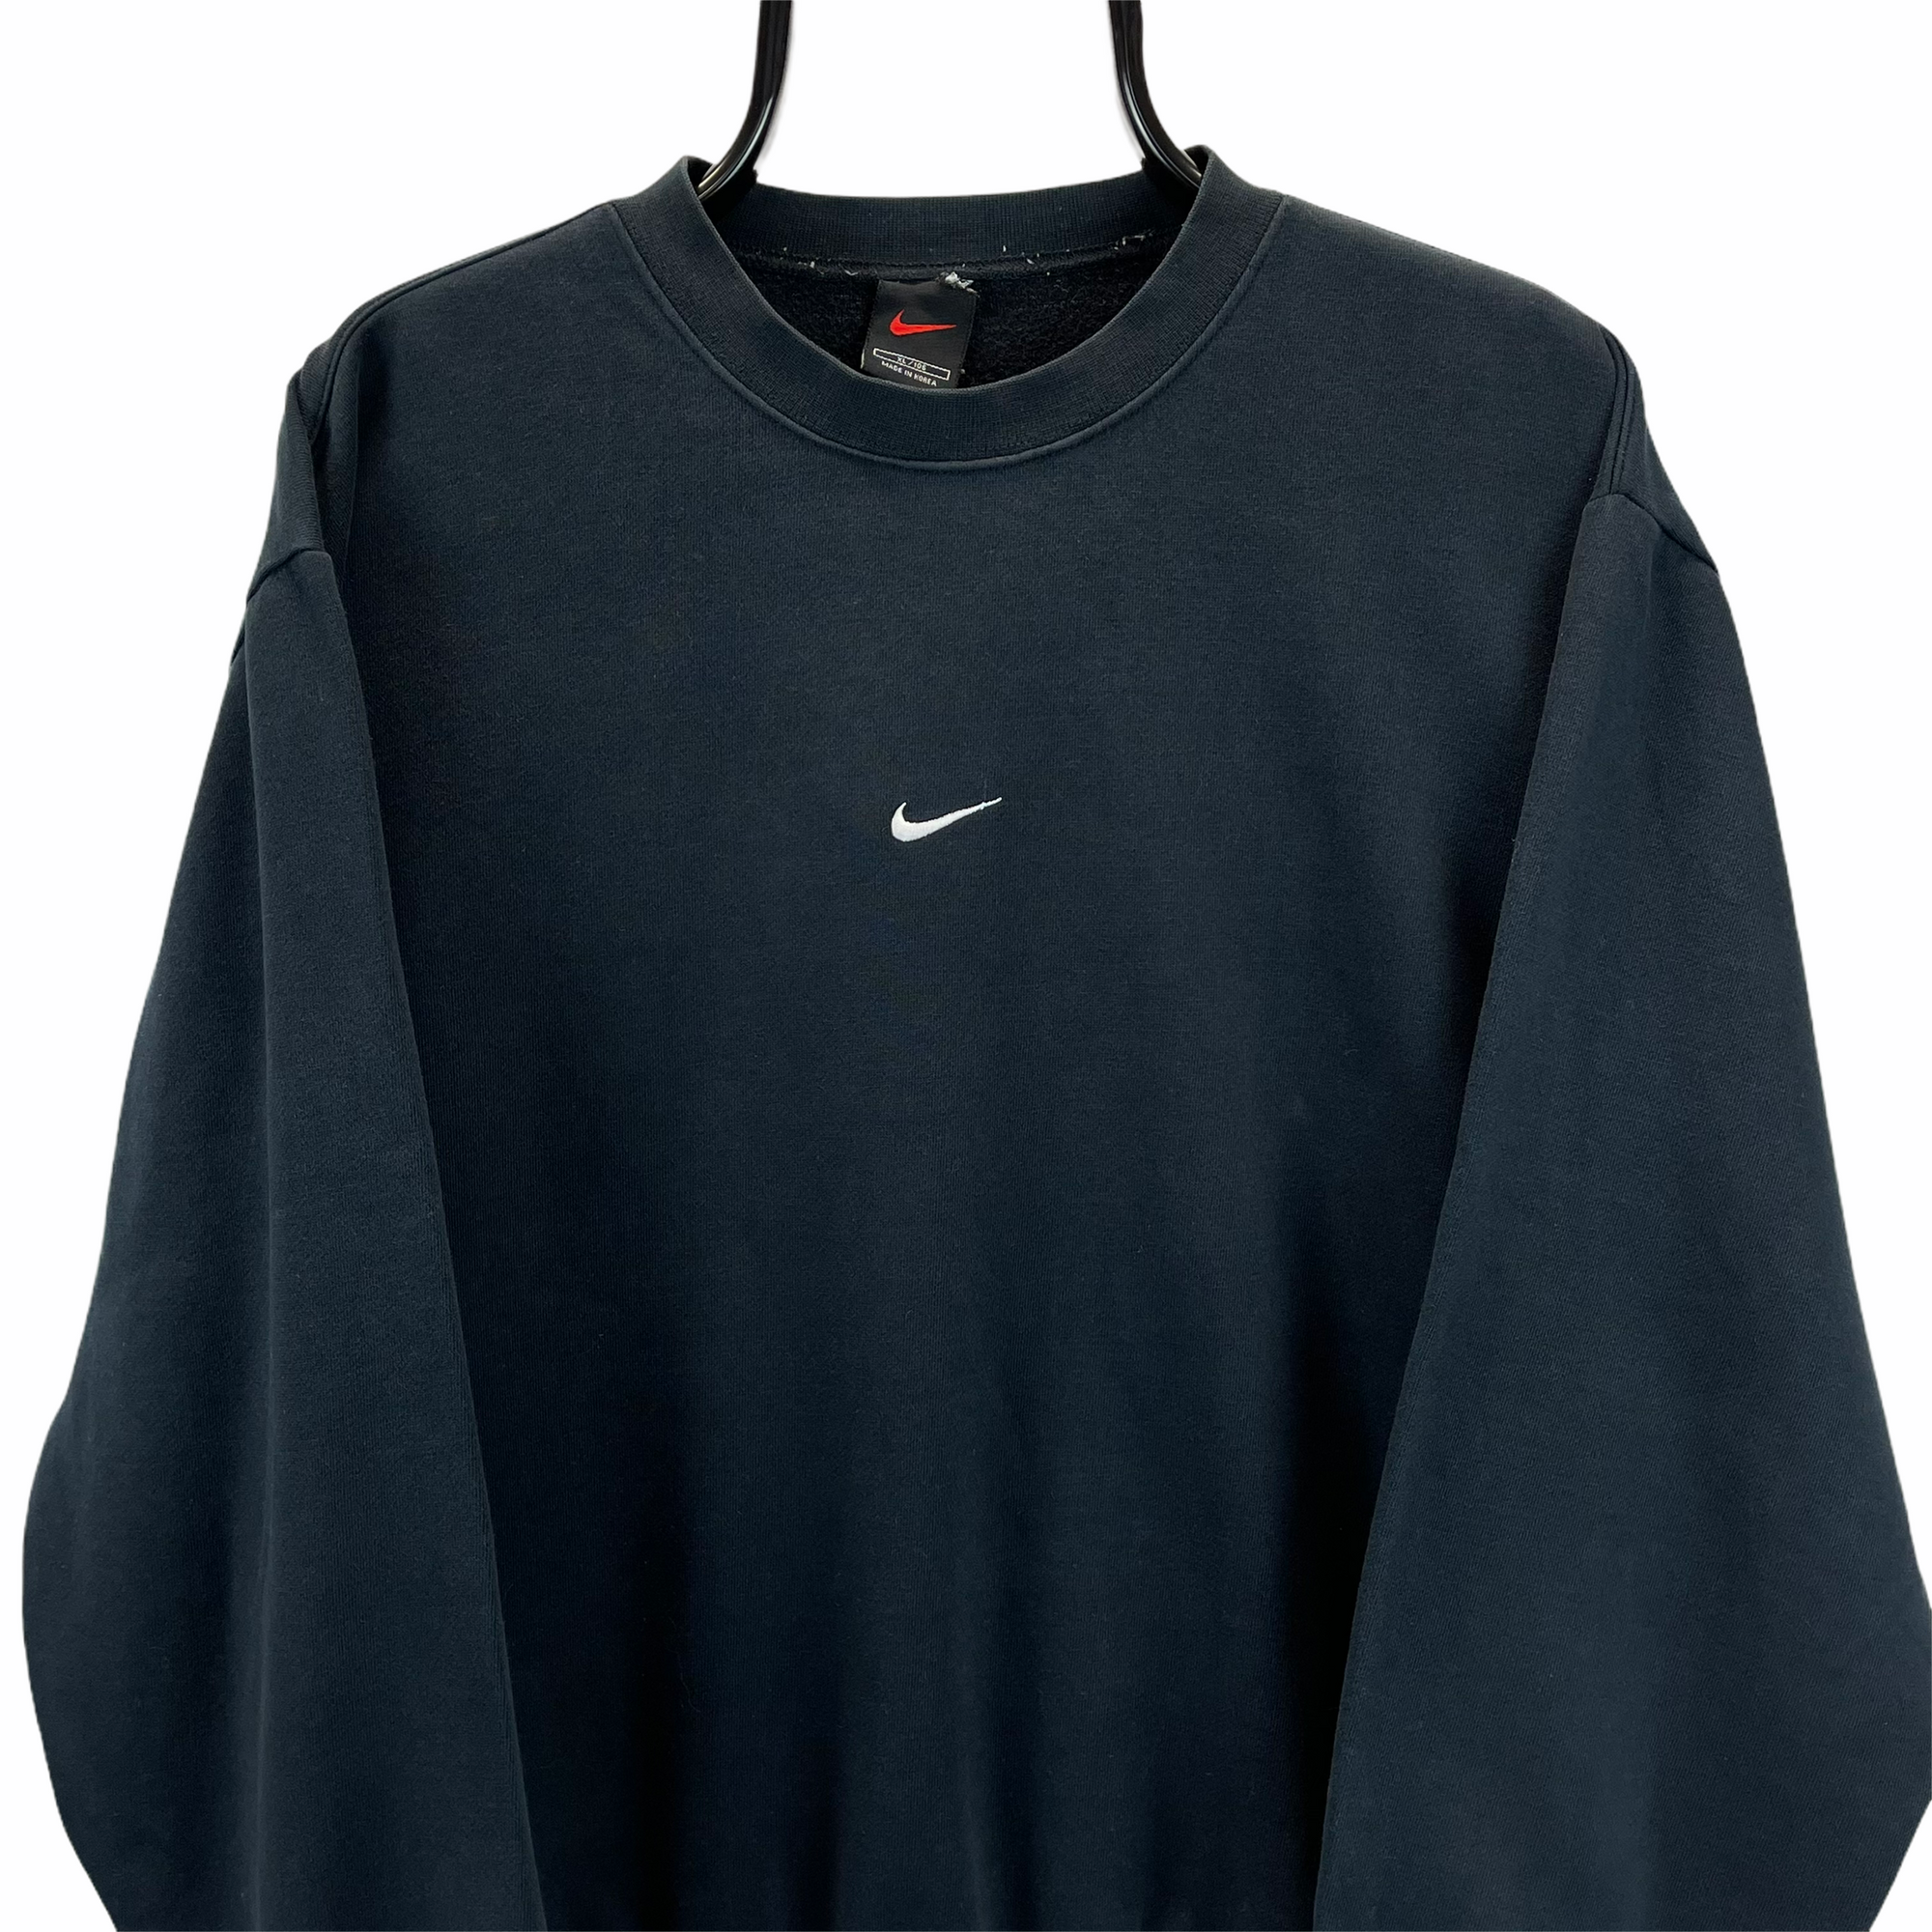 Vintage 90s Nike Embroidered Centre Logo Sweatshirt in Black - Men's Large/Women's XL